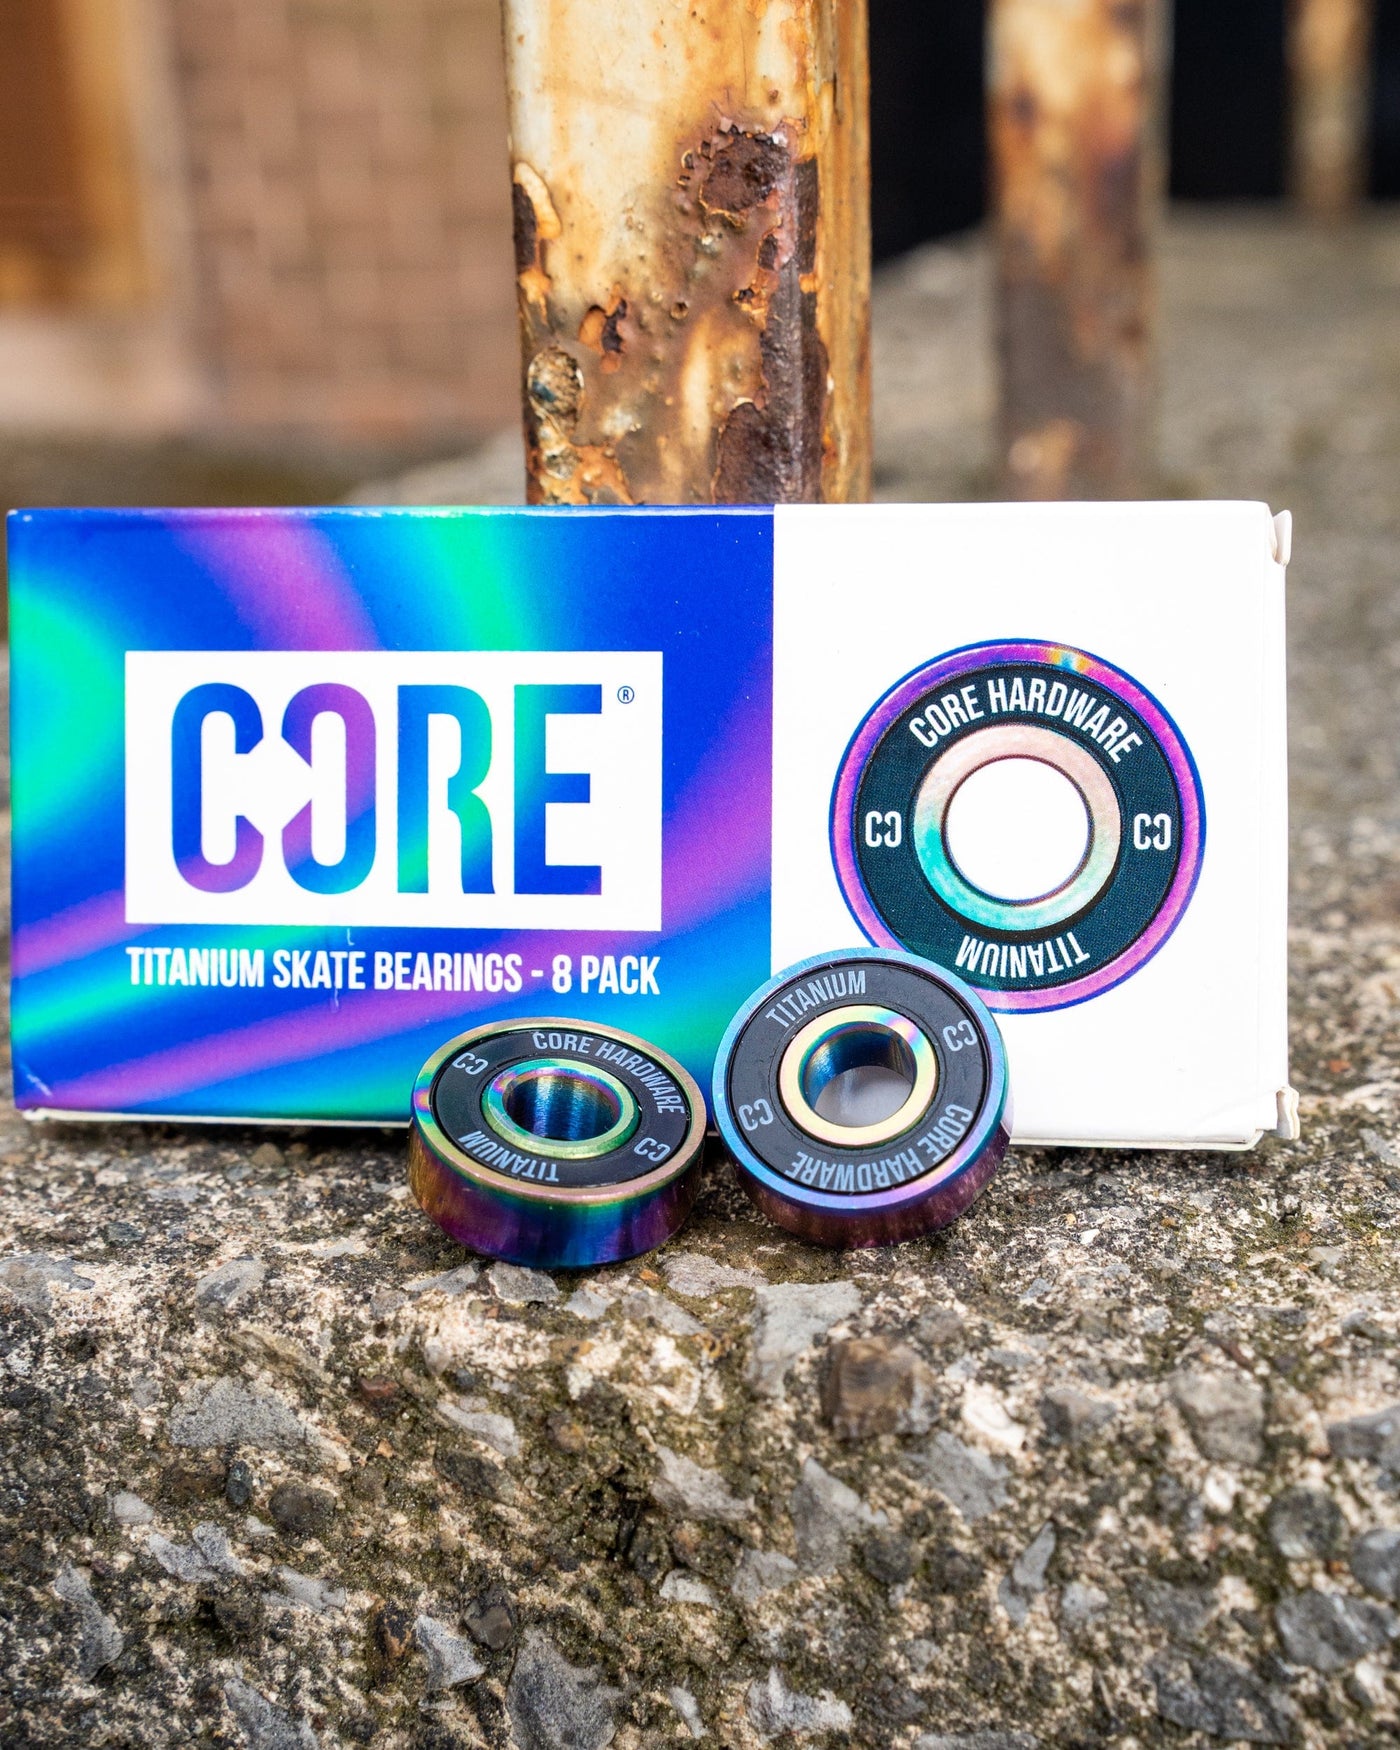 CORE Hardware Titanium Skate Bearings NeoChrome 8PK I Skate Board Bearings Packaging